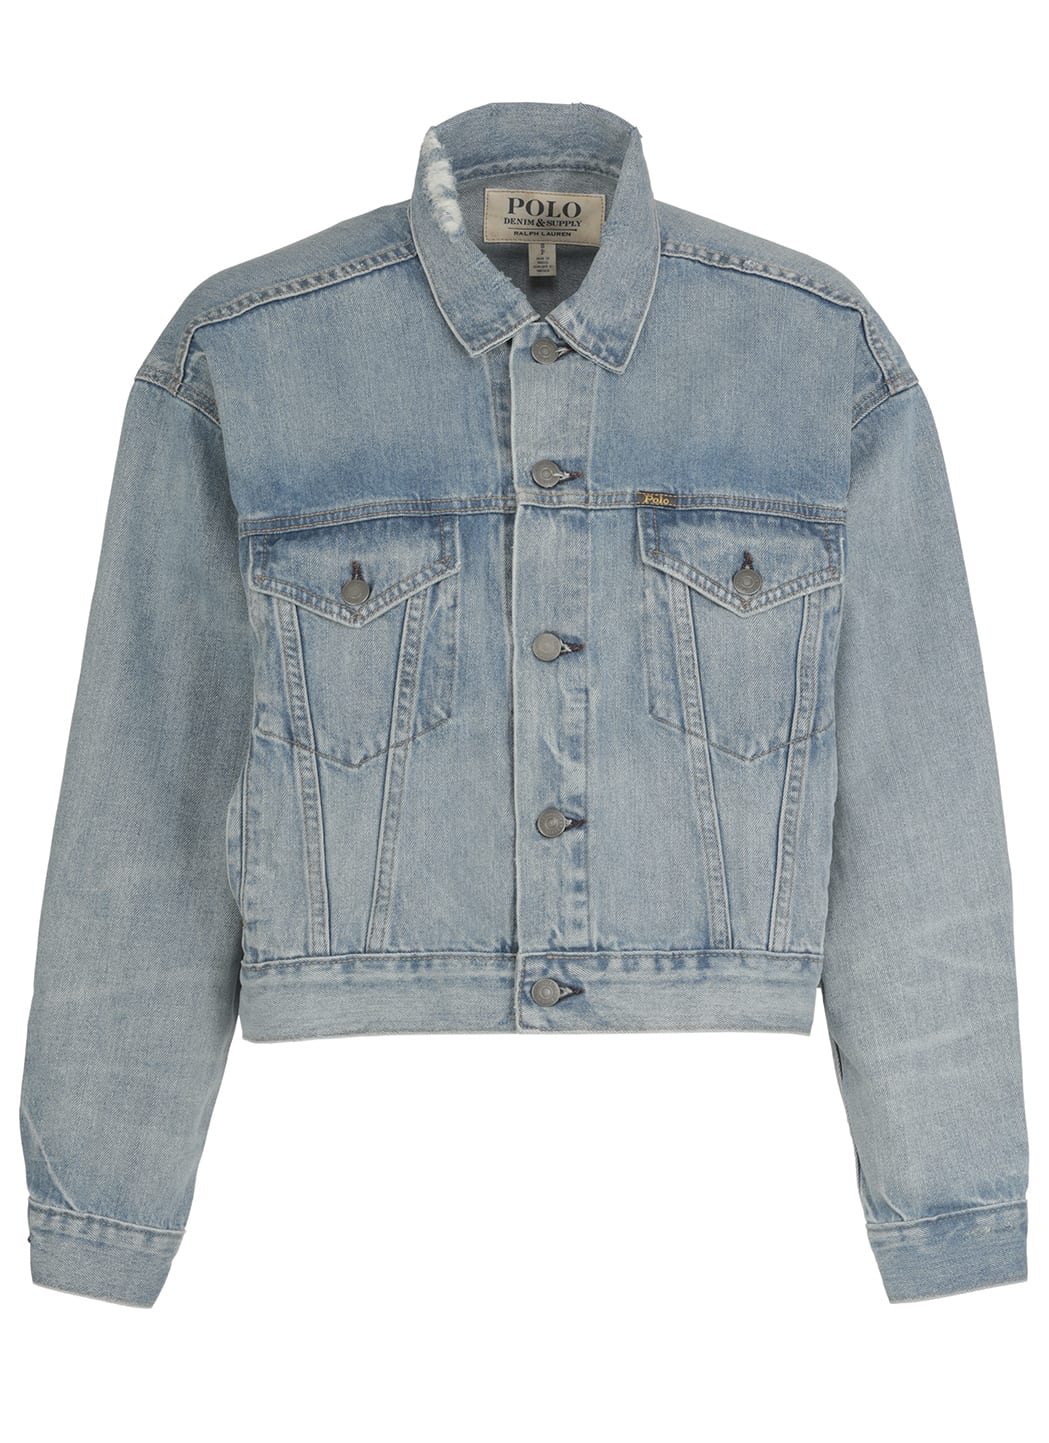 Ralph Lauren Oversize Cropped Jeans Jacket